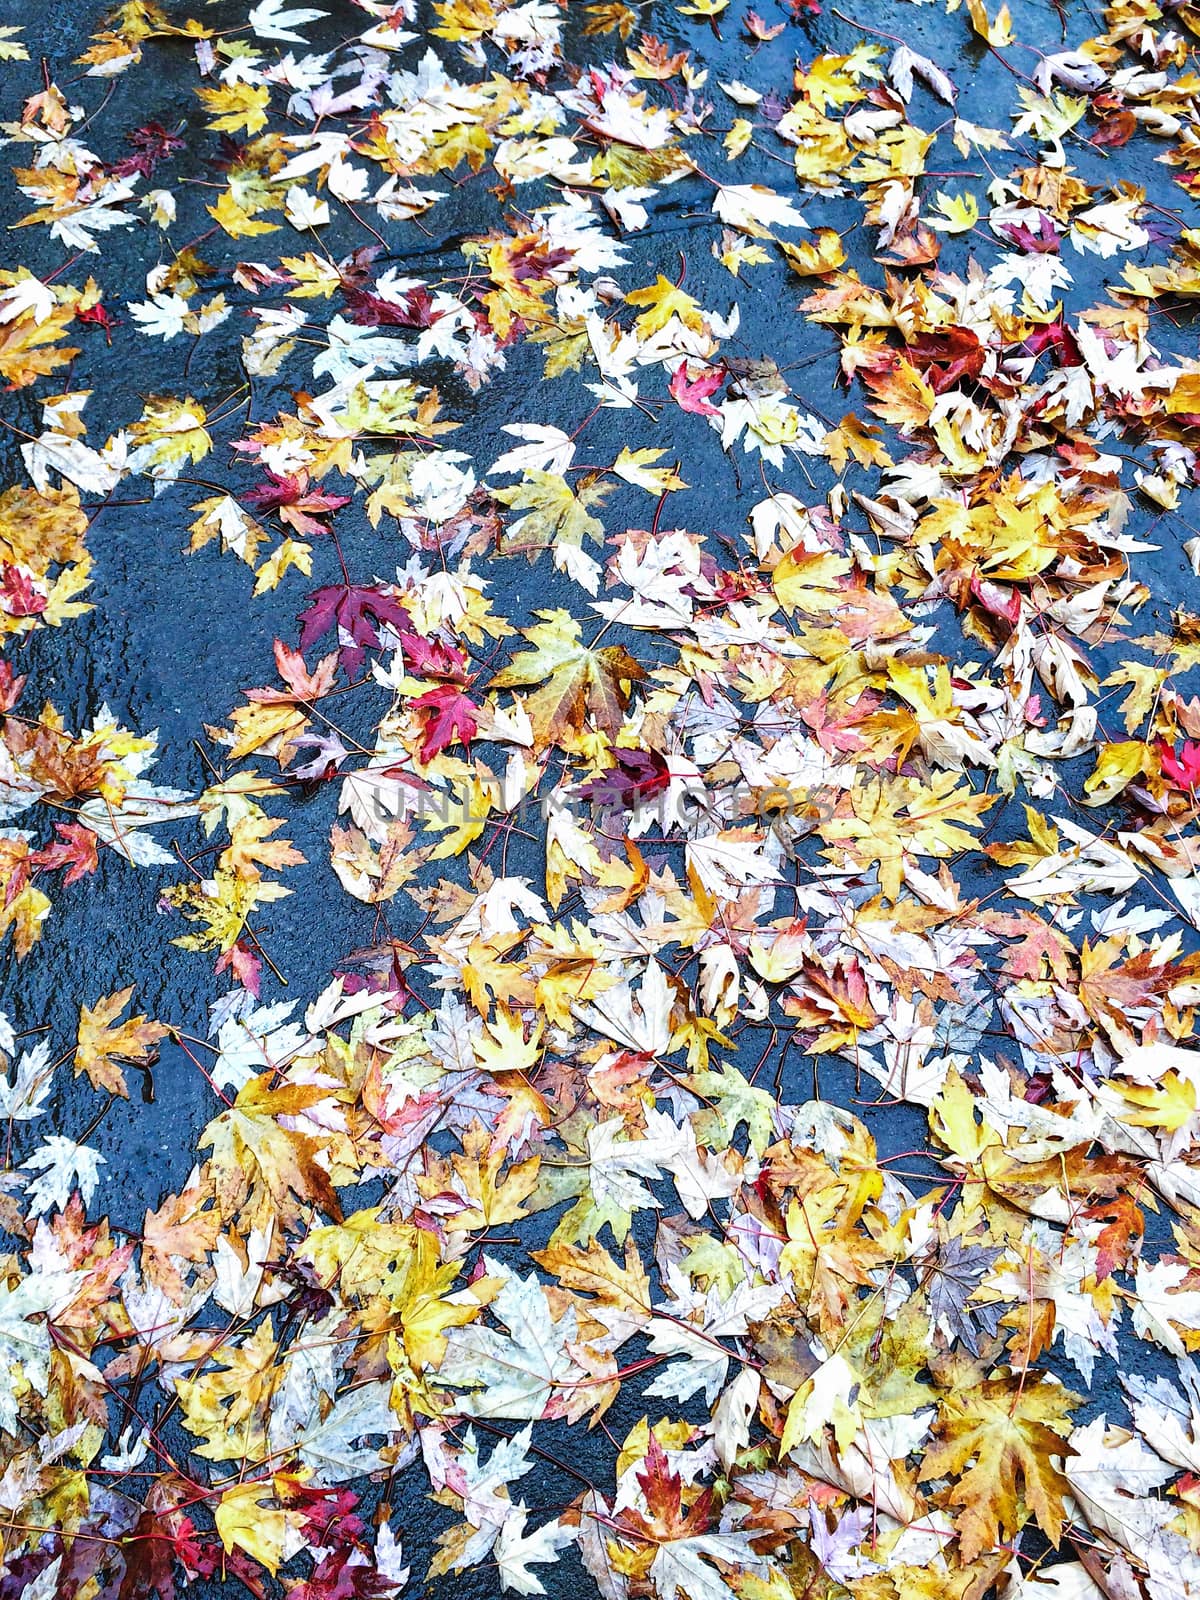 Yellow maple leaves on wet asphalt. Autumn background.